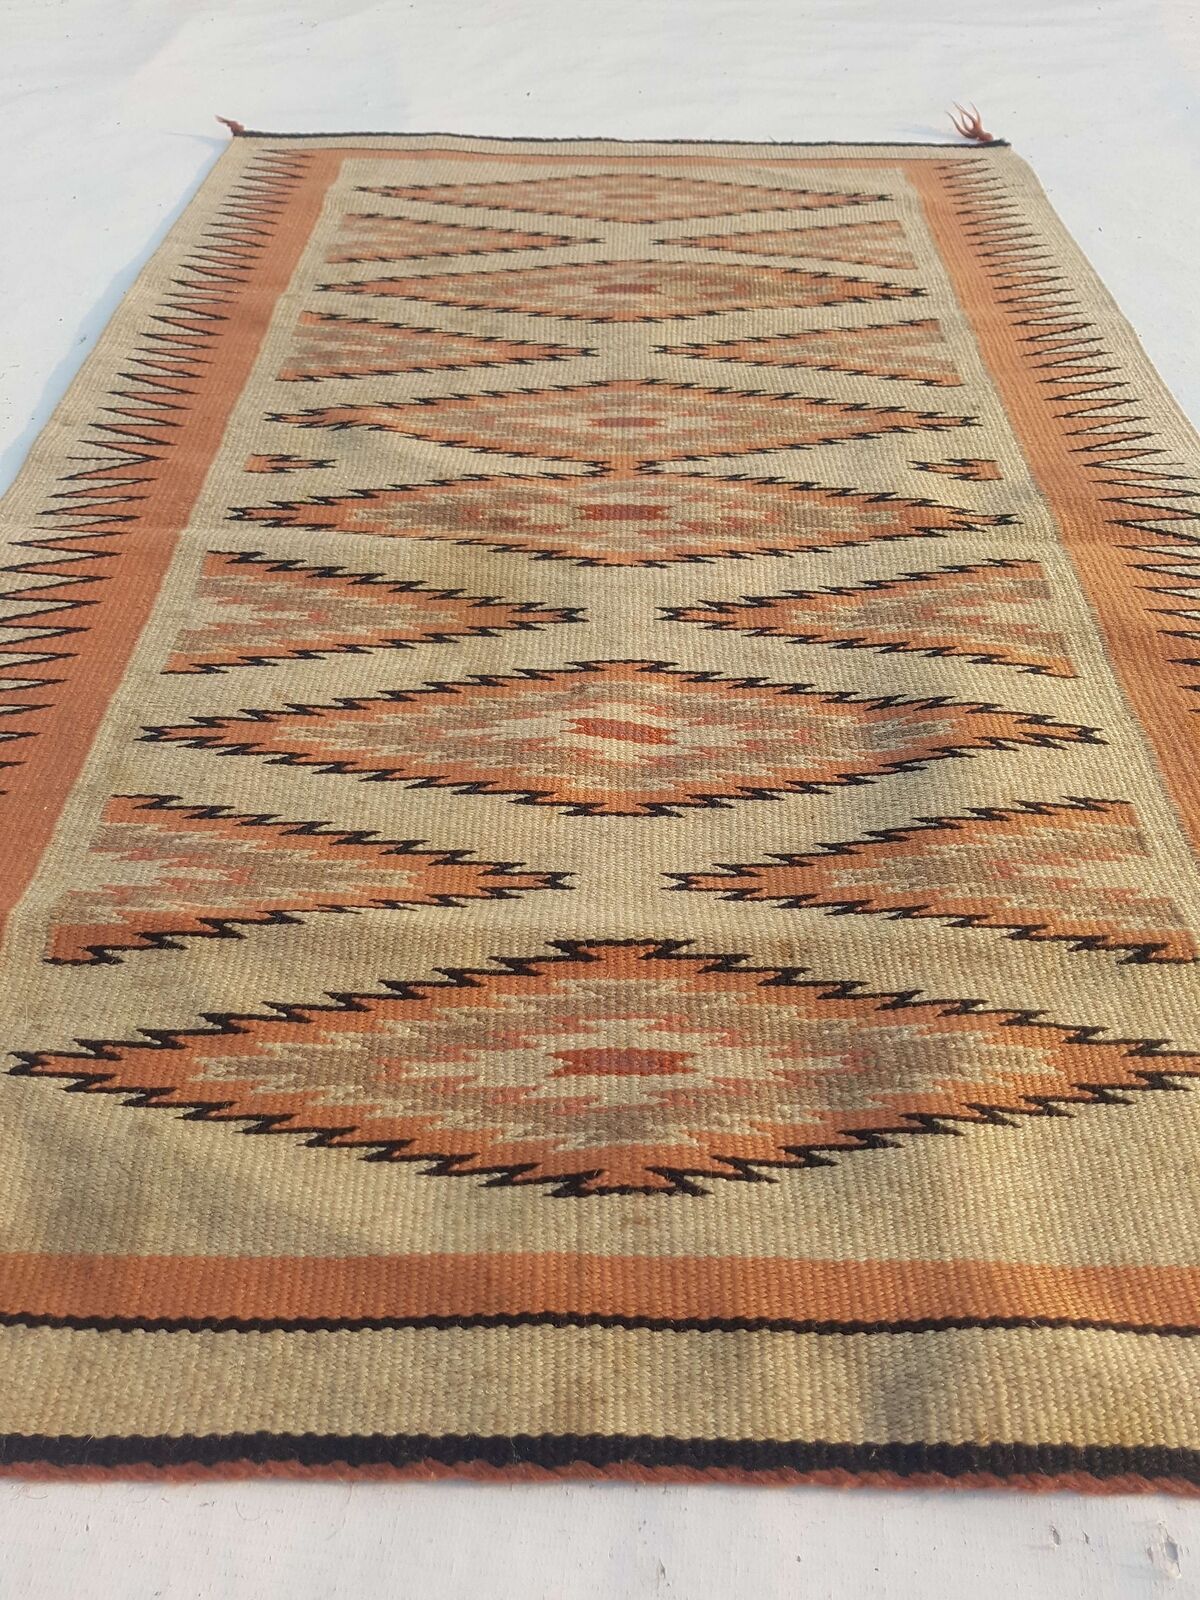 Antique Navajo Handwoven Native American Indian Rug Wool Blanket Carpet 92x59cm